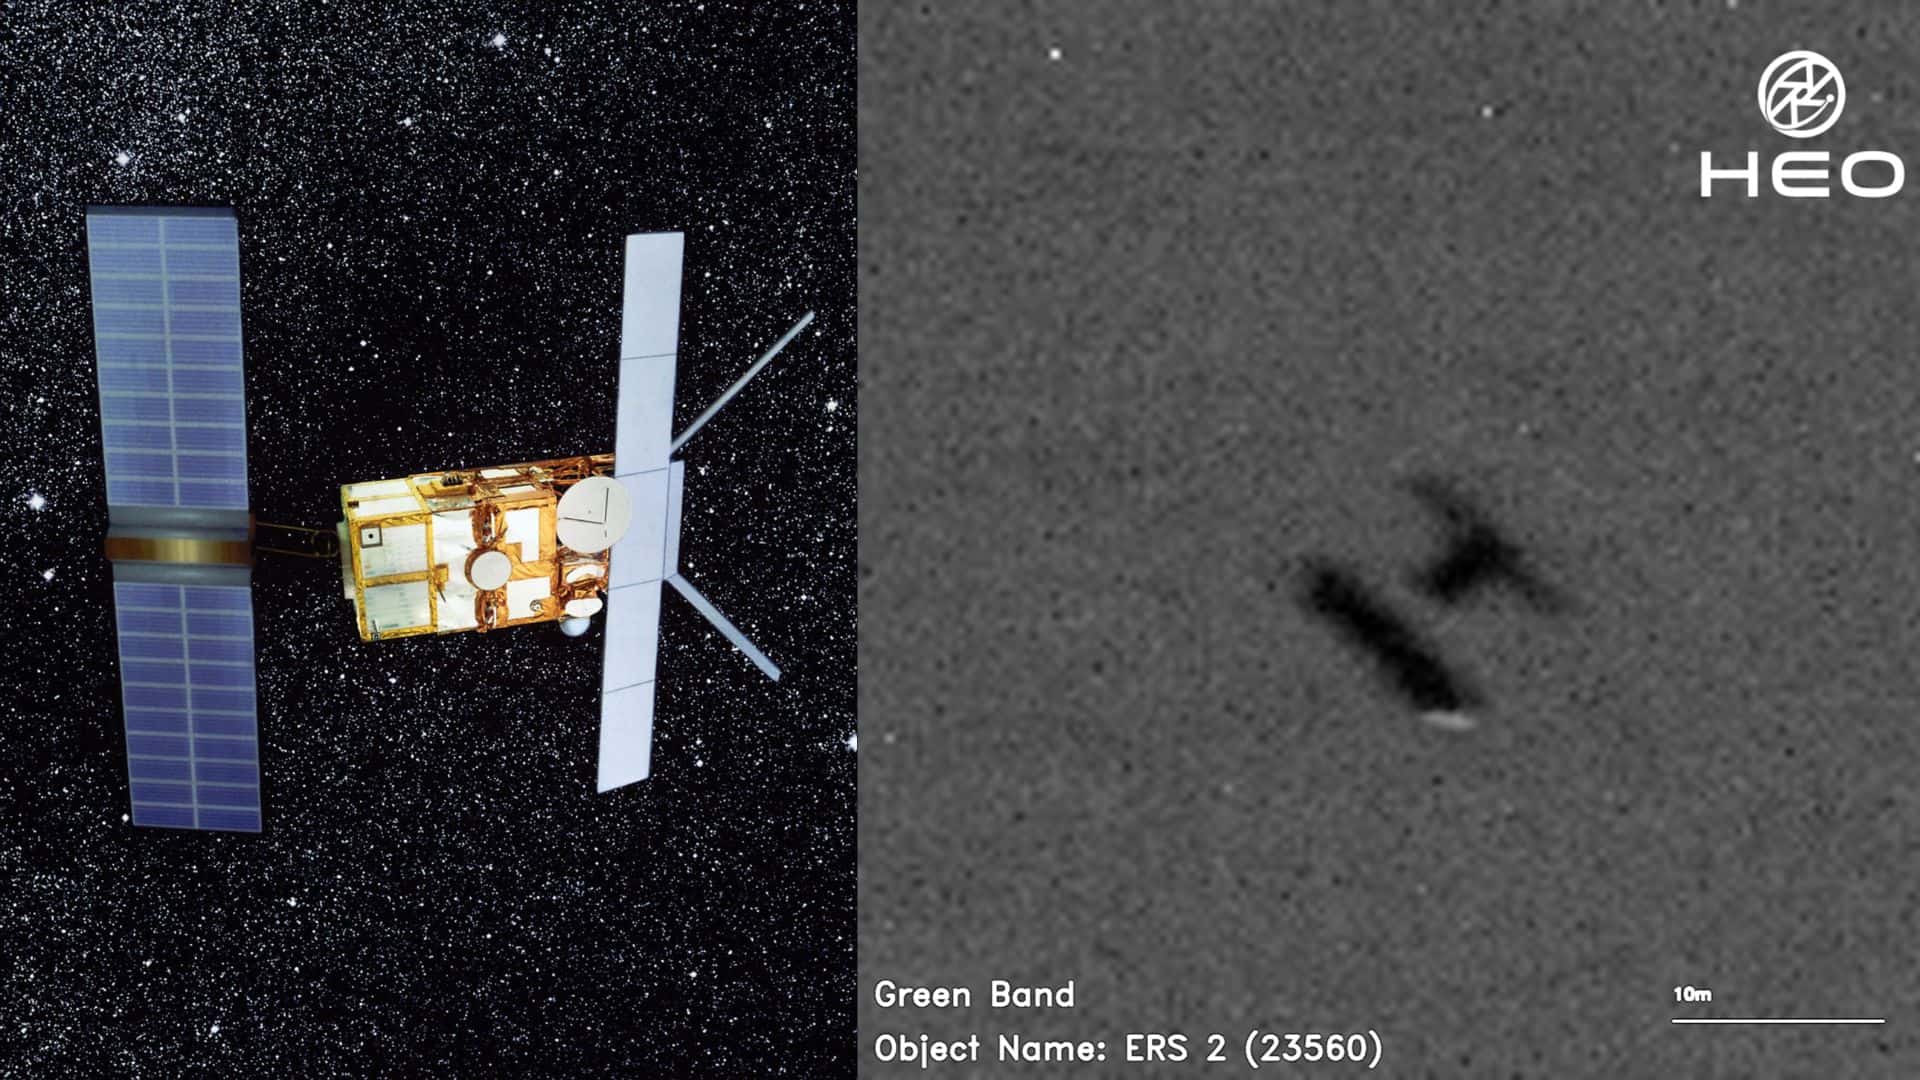 Artist's illustration of the ERS-2 satellite vs. HEO's captured ERS-2 satellite